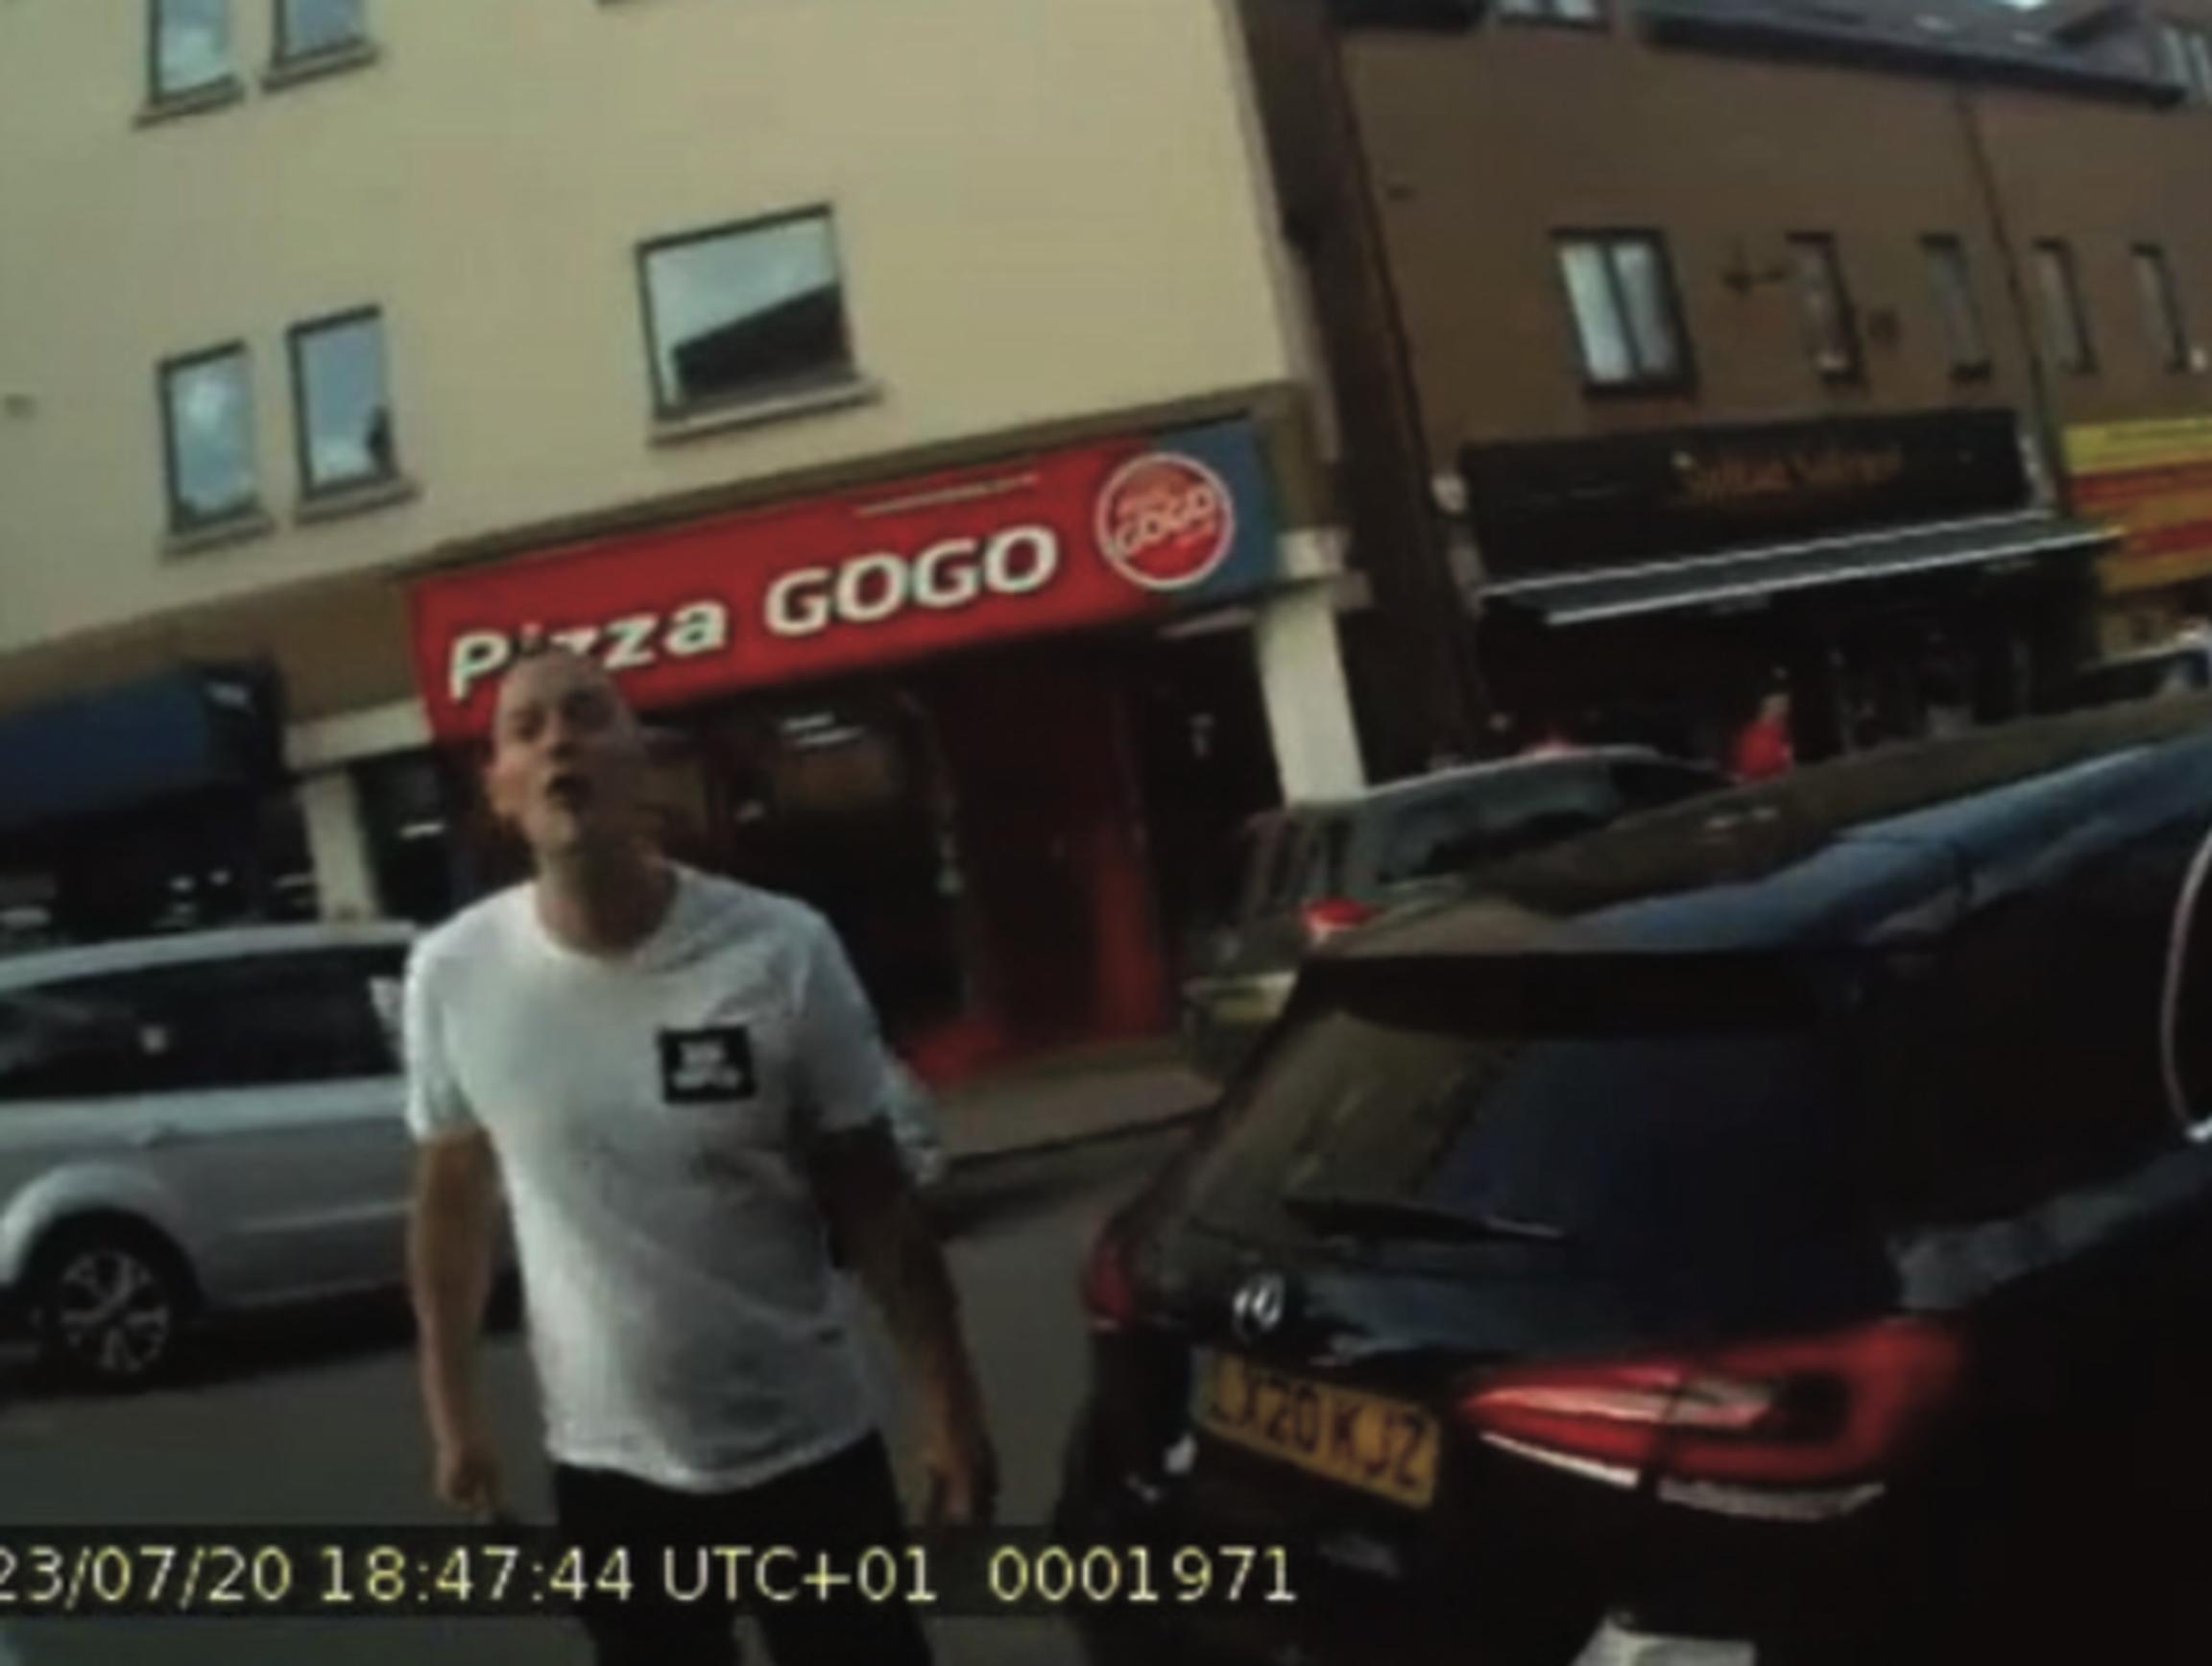 Grahame Swinbourne was caught on camera (Gravesham Borough Council)